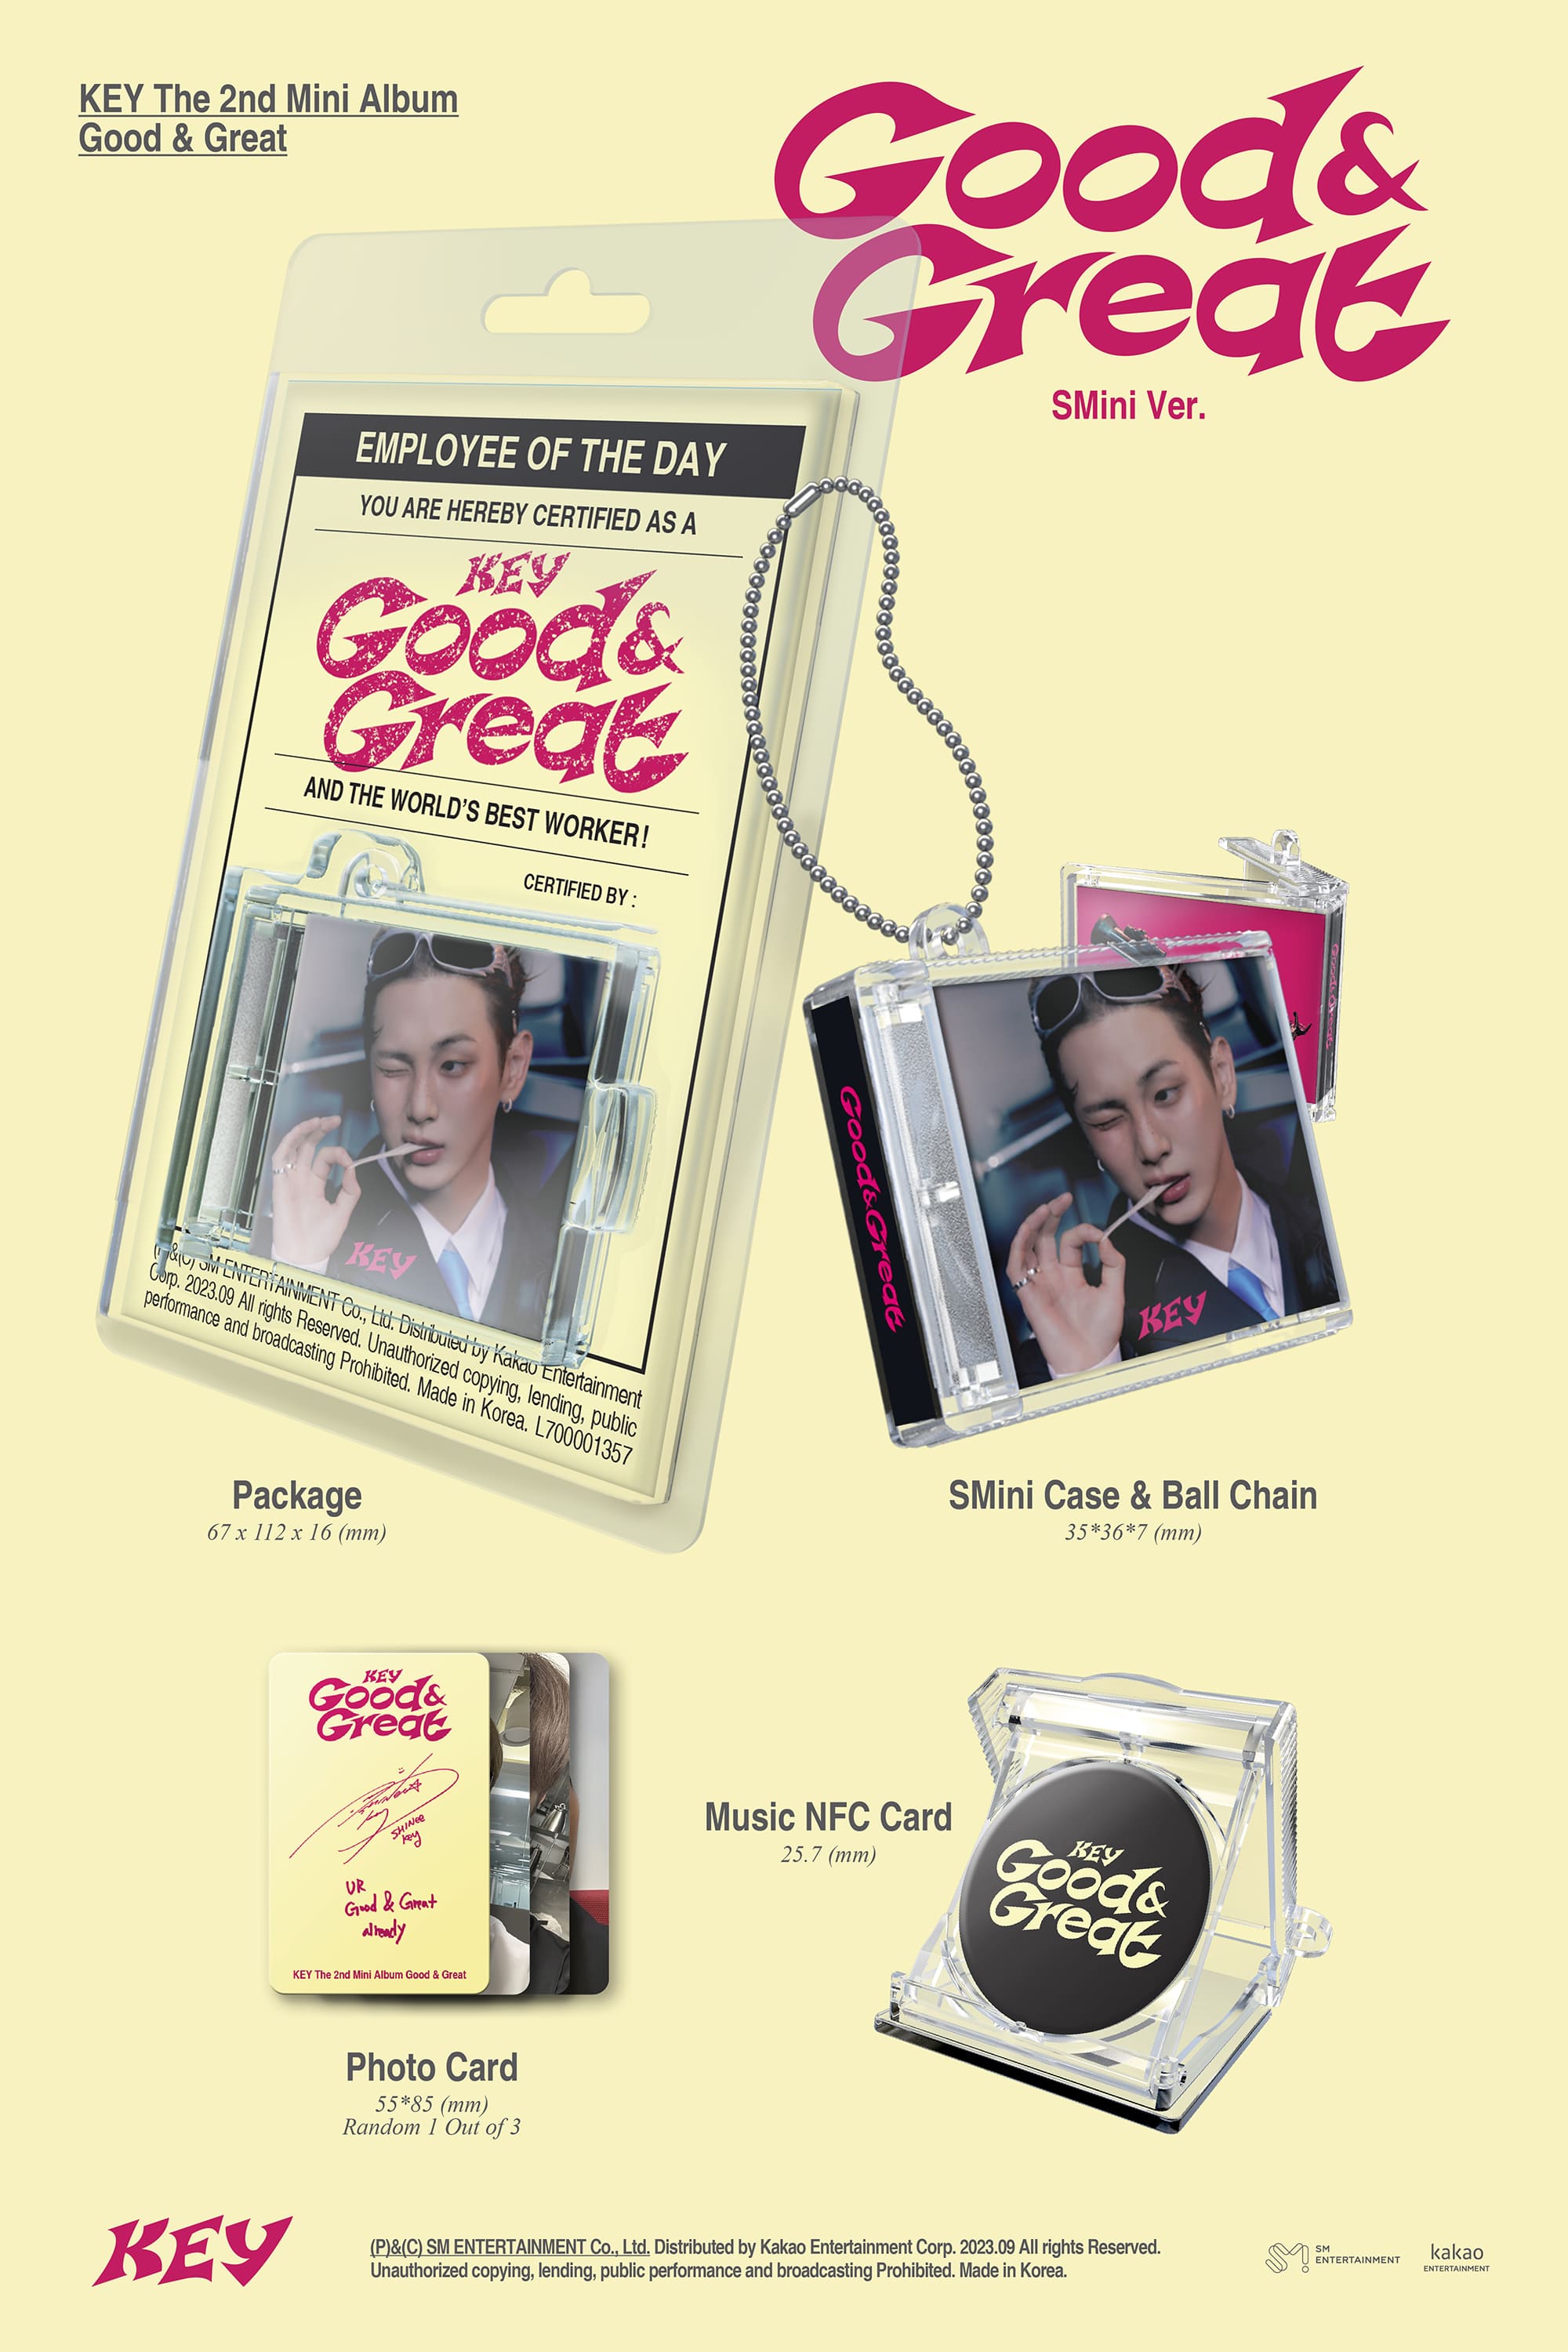 KEY 2nd Mini Album Good & Great SMini Version